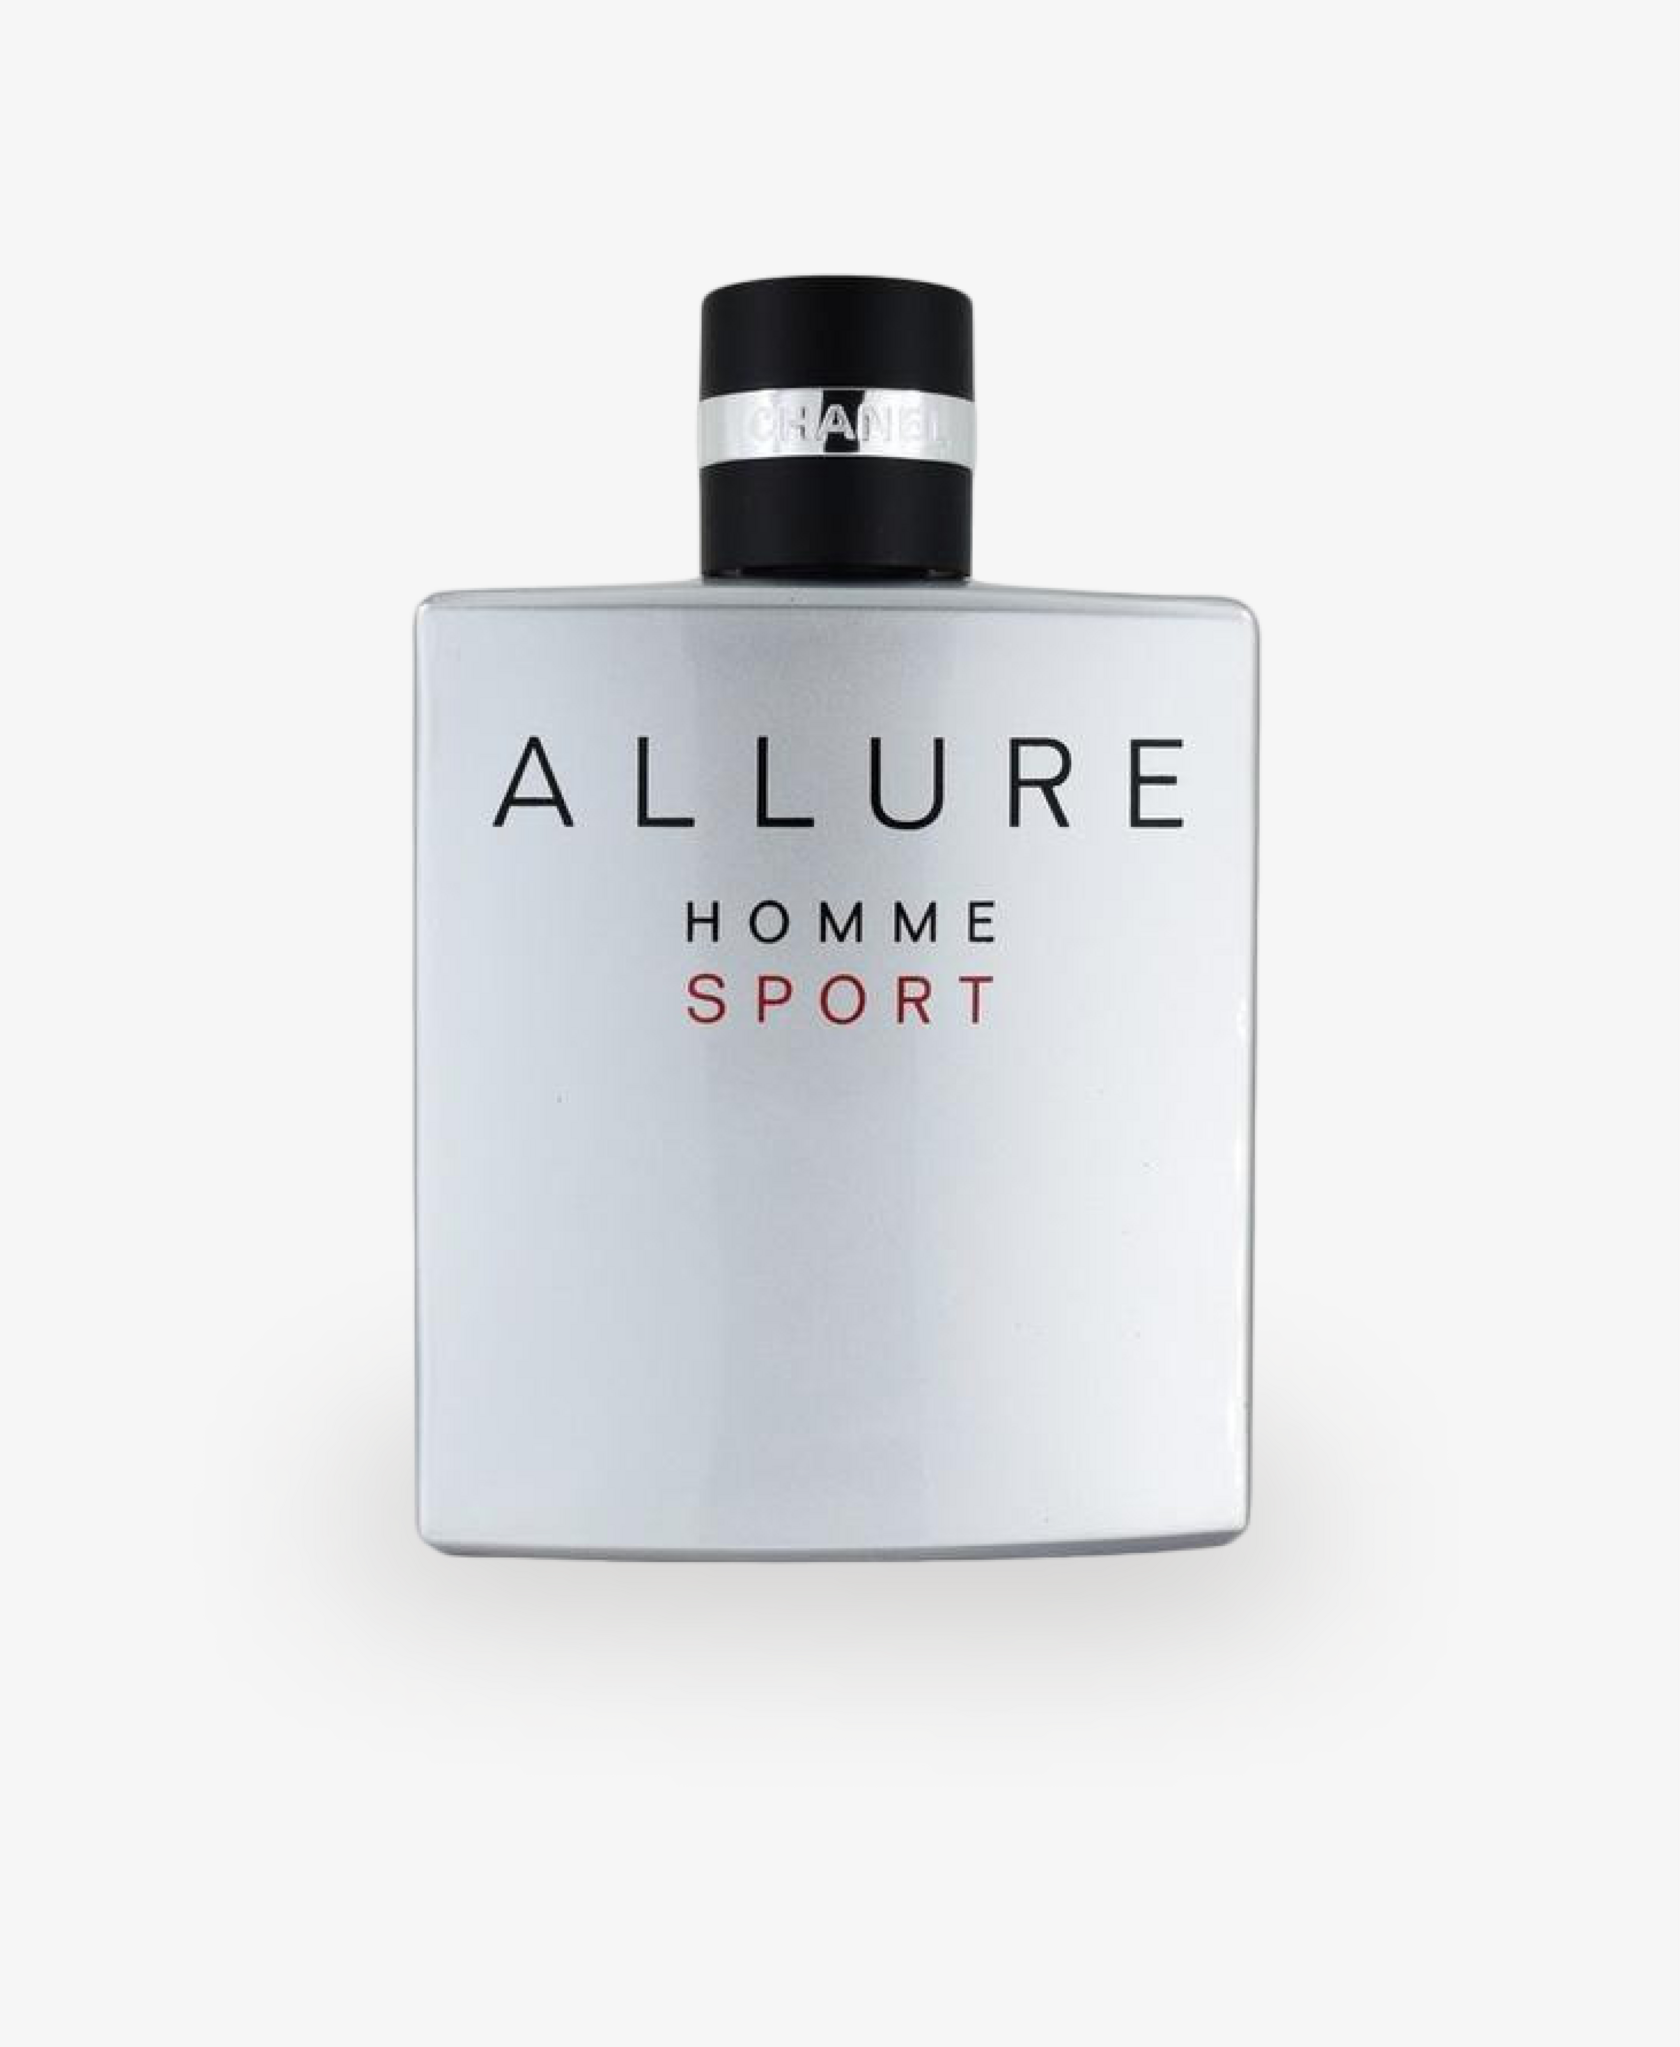 Allure homme sport мужской. Allure homme Sport 50ml. Chanel Allure homme Sport. Chanel Allure Sport 100 ml. Chanel Allure homme Sport 100ml EDT men.